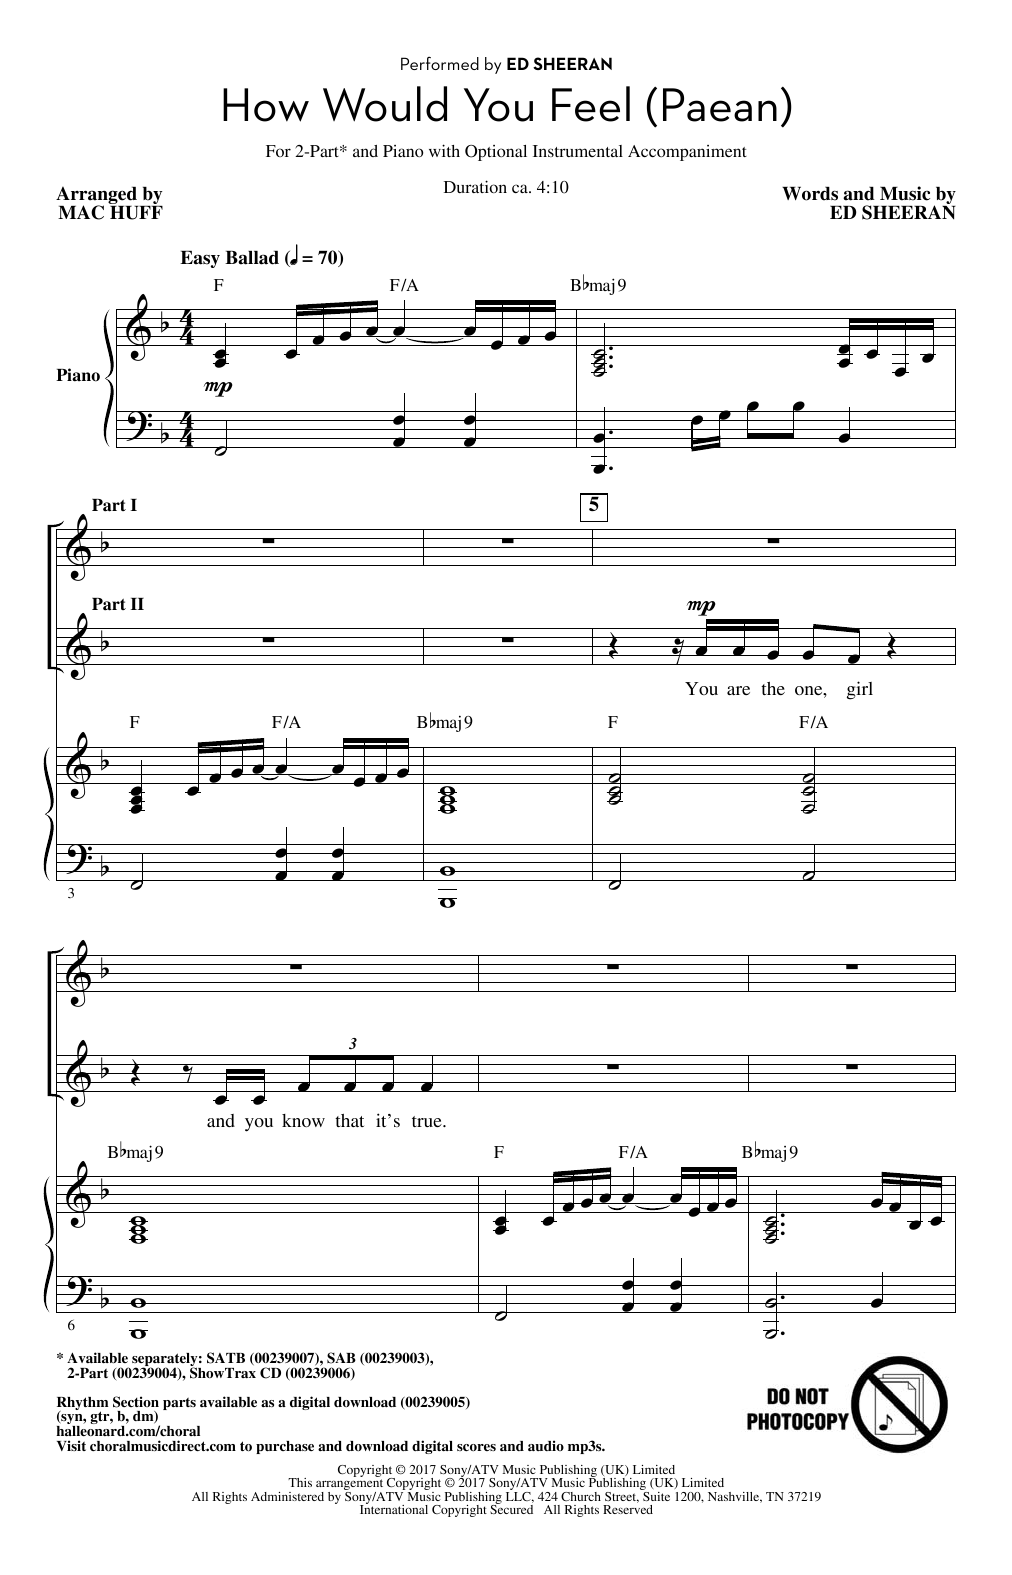 Ed Sheeran How Would You Feel (Paean) (arr. Mac Huff) Sheet Music Notes & Chords for 2-Part Choir - Download or Print PDF